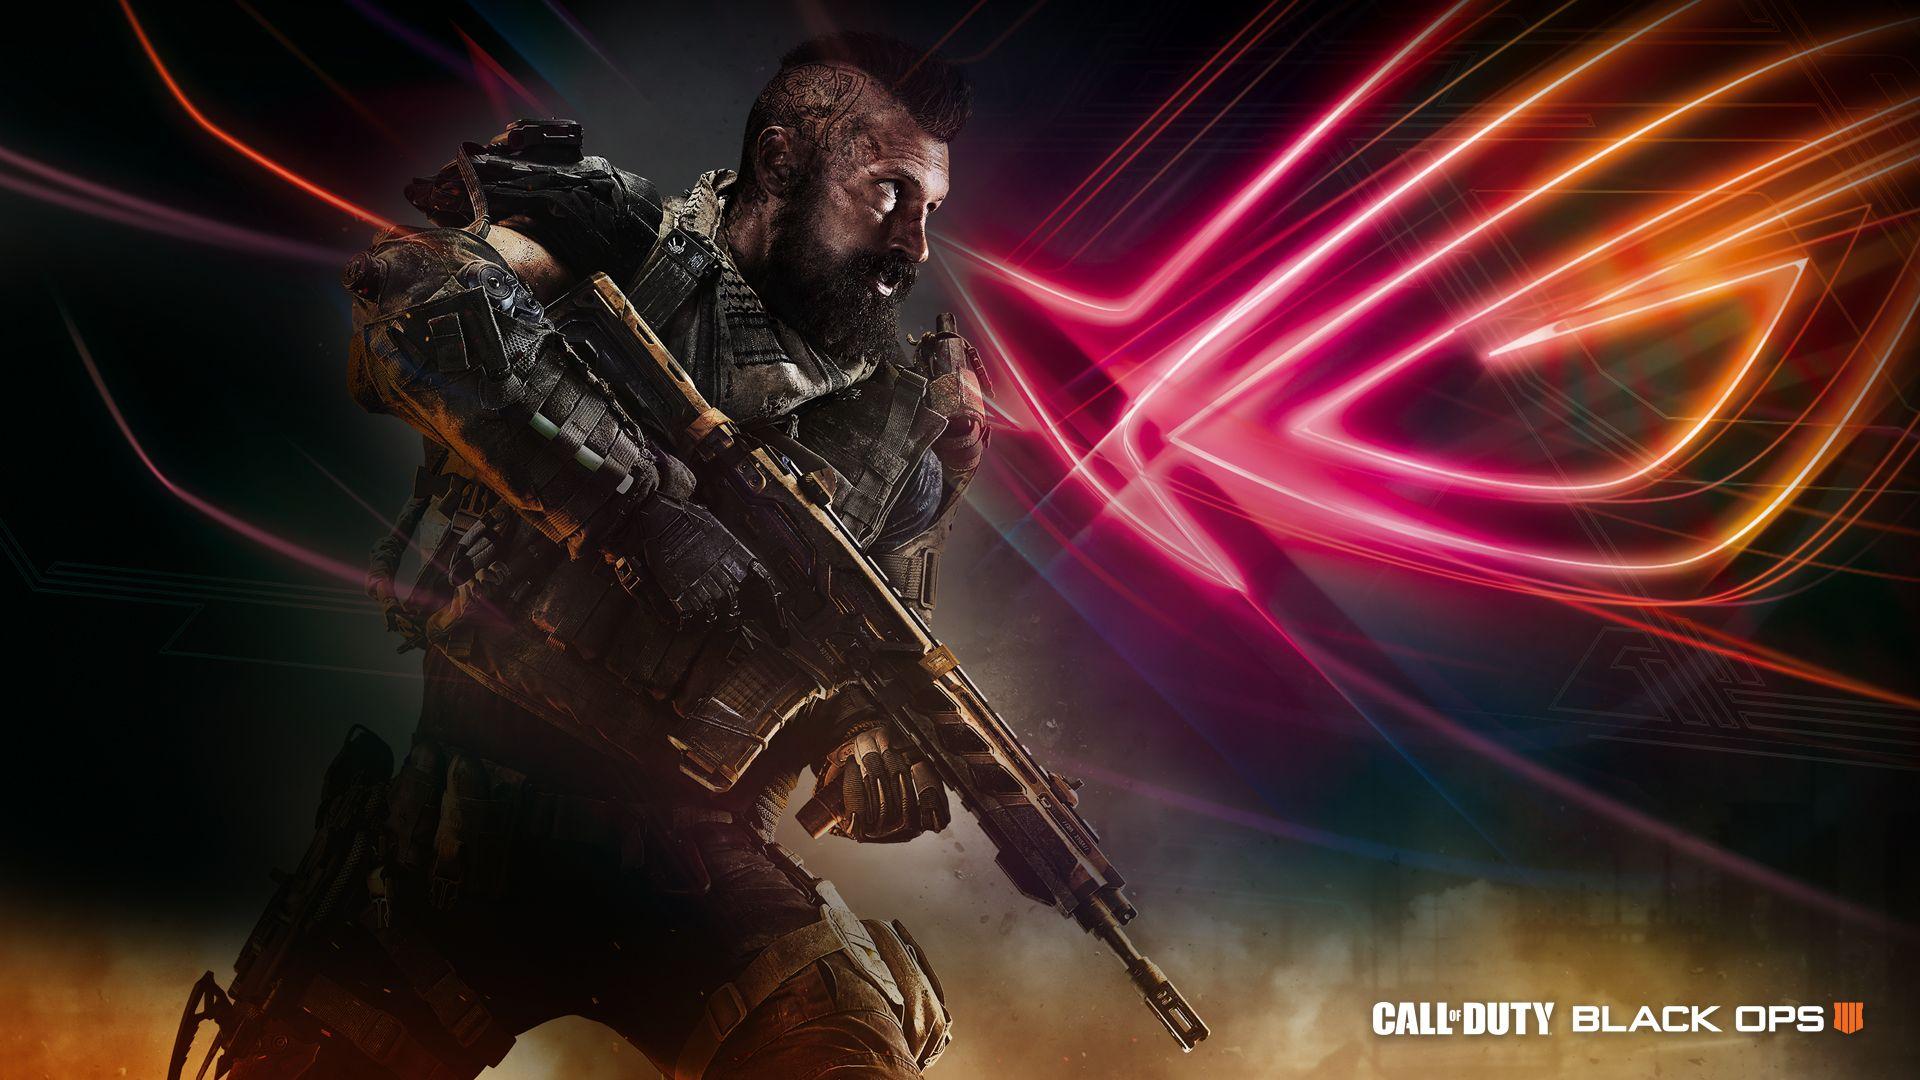 ROG Call of Duty Black Ops 4